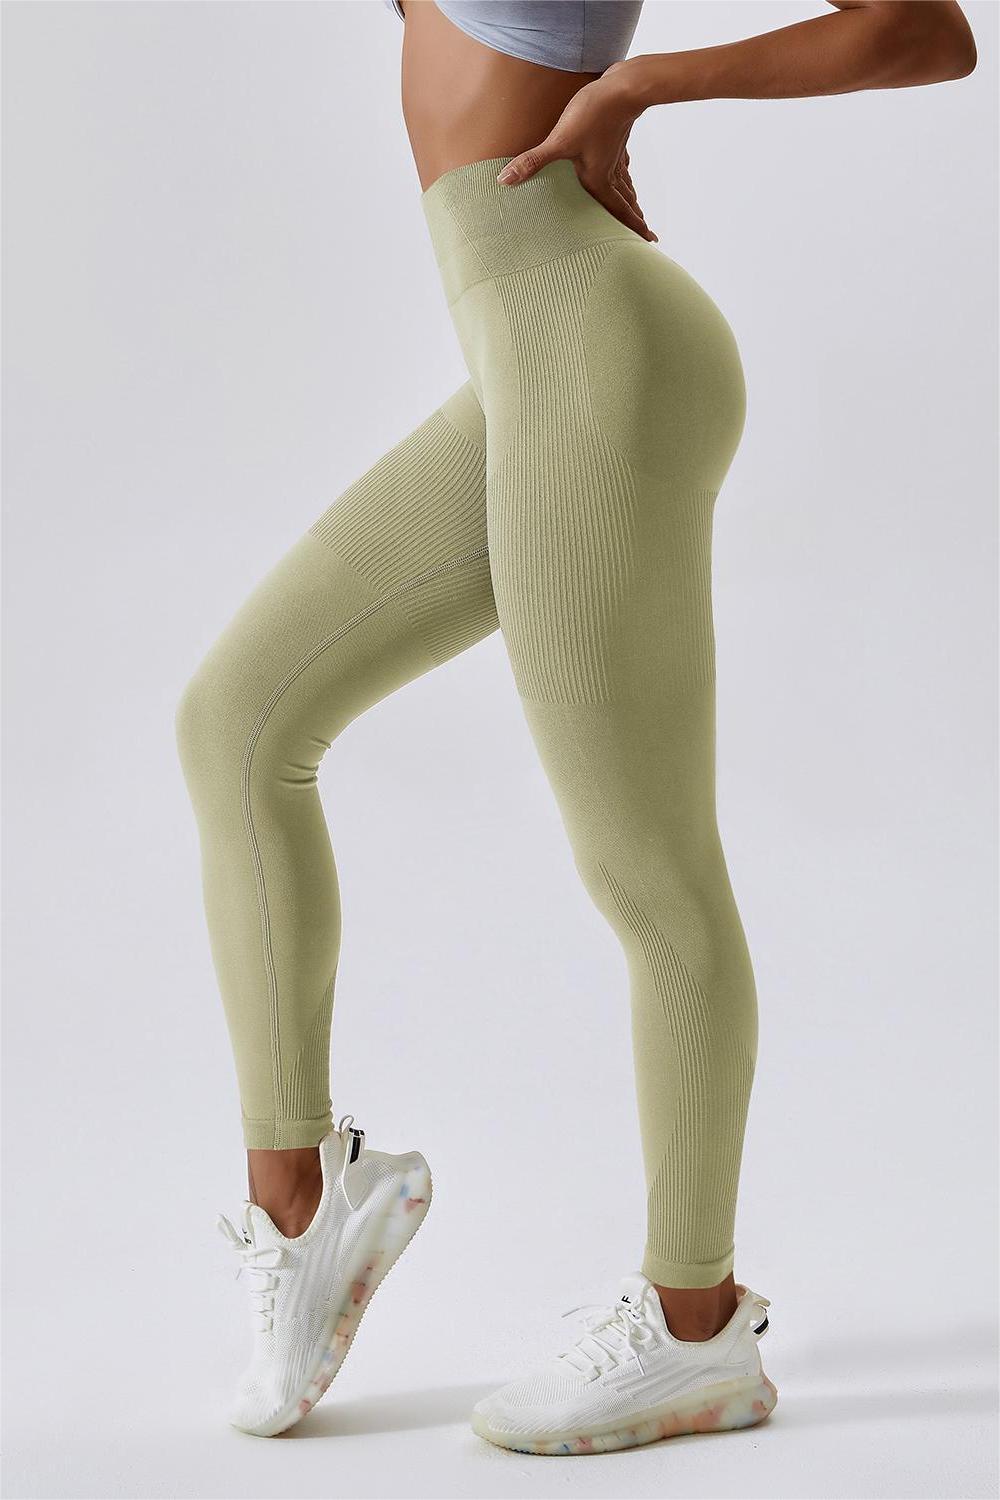  COMEUP High Waisted Seamless Leggings for Women with The  Triangular Seam Design in The Waist – 4-Way Stretch Sports Leggings (as1,  Alpha, x_s, Regular, Regular, Dirty Green) : ביגוד, נעליים ותכשיטים